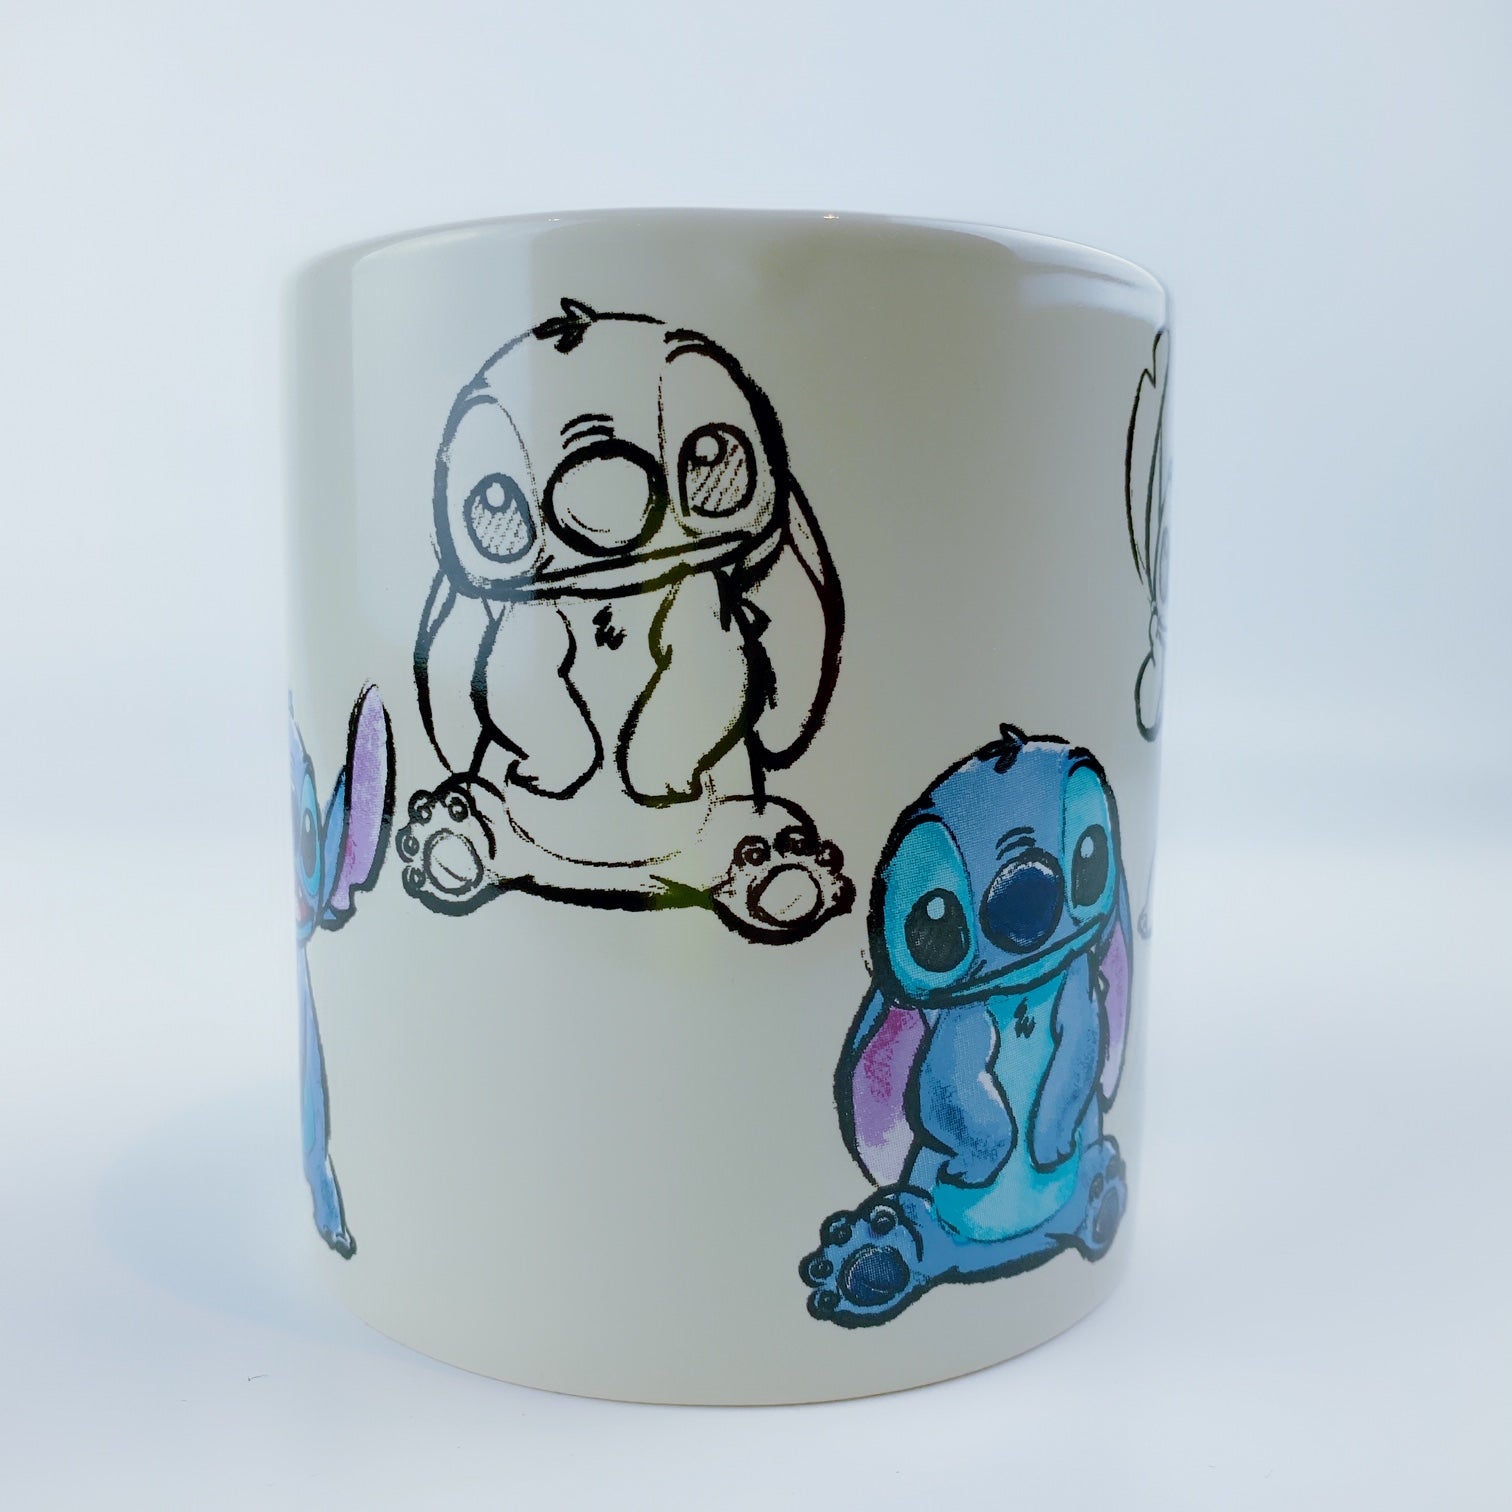 Disney Lilo & Stitch Stitch con bebé patos taza de cerámica taza 20 oz